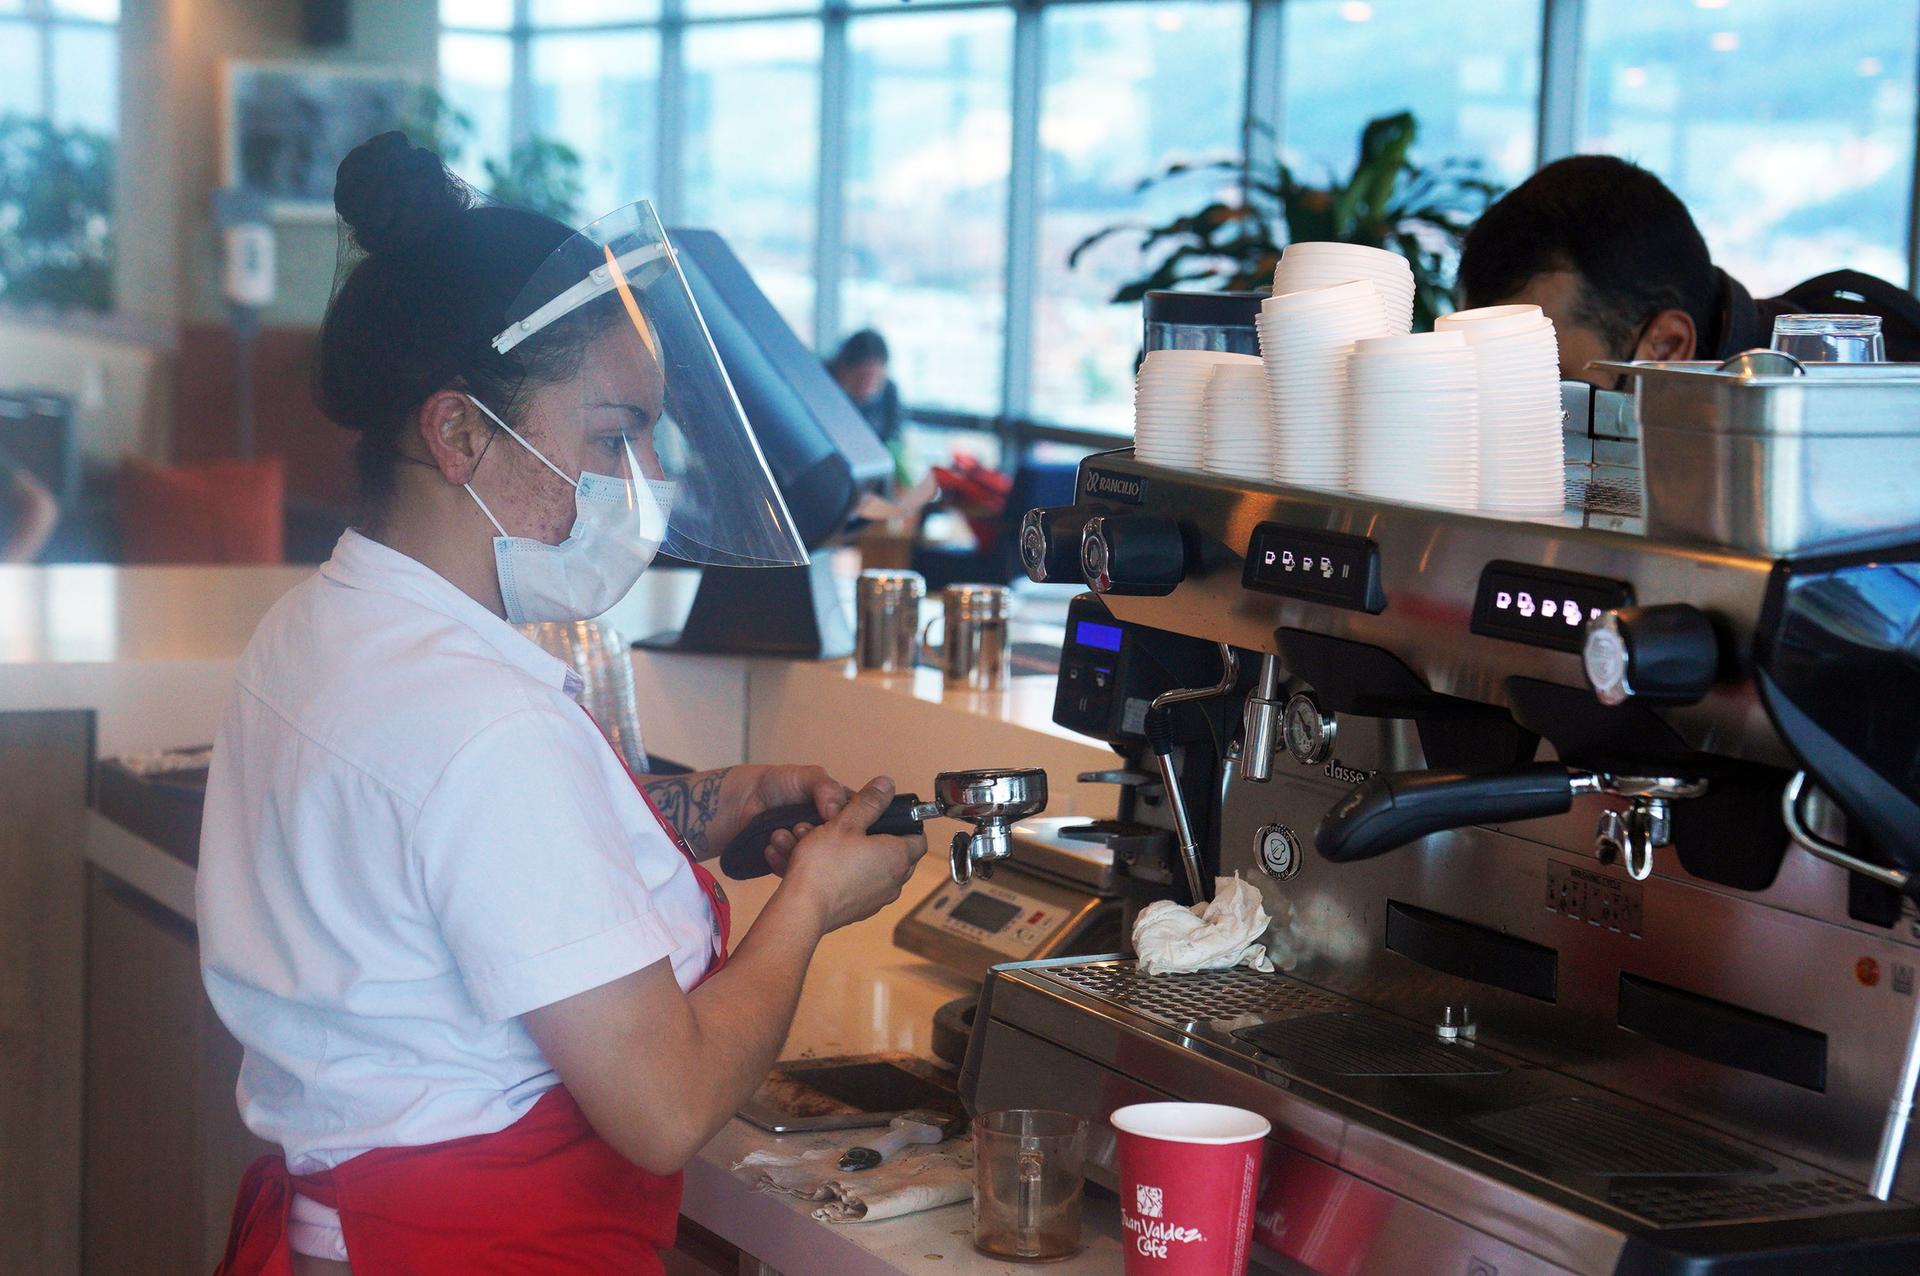 Sandra Salazar wears protective gear as a barista behind the counter.